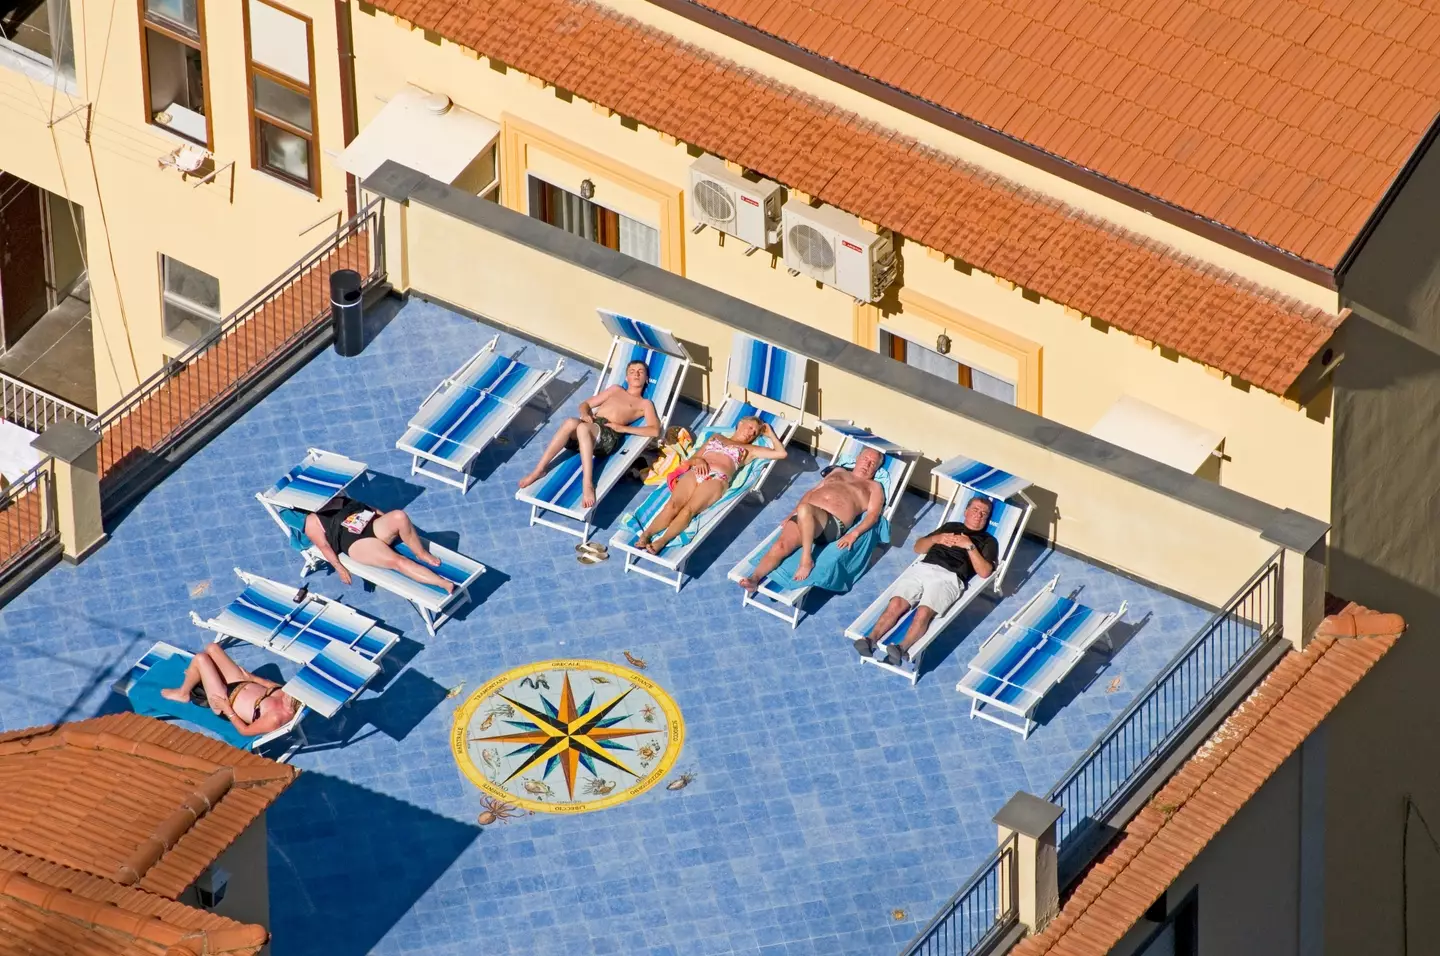 Tourists sunbathing in Sorrento.